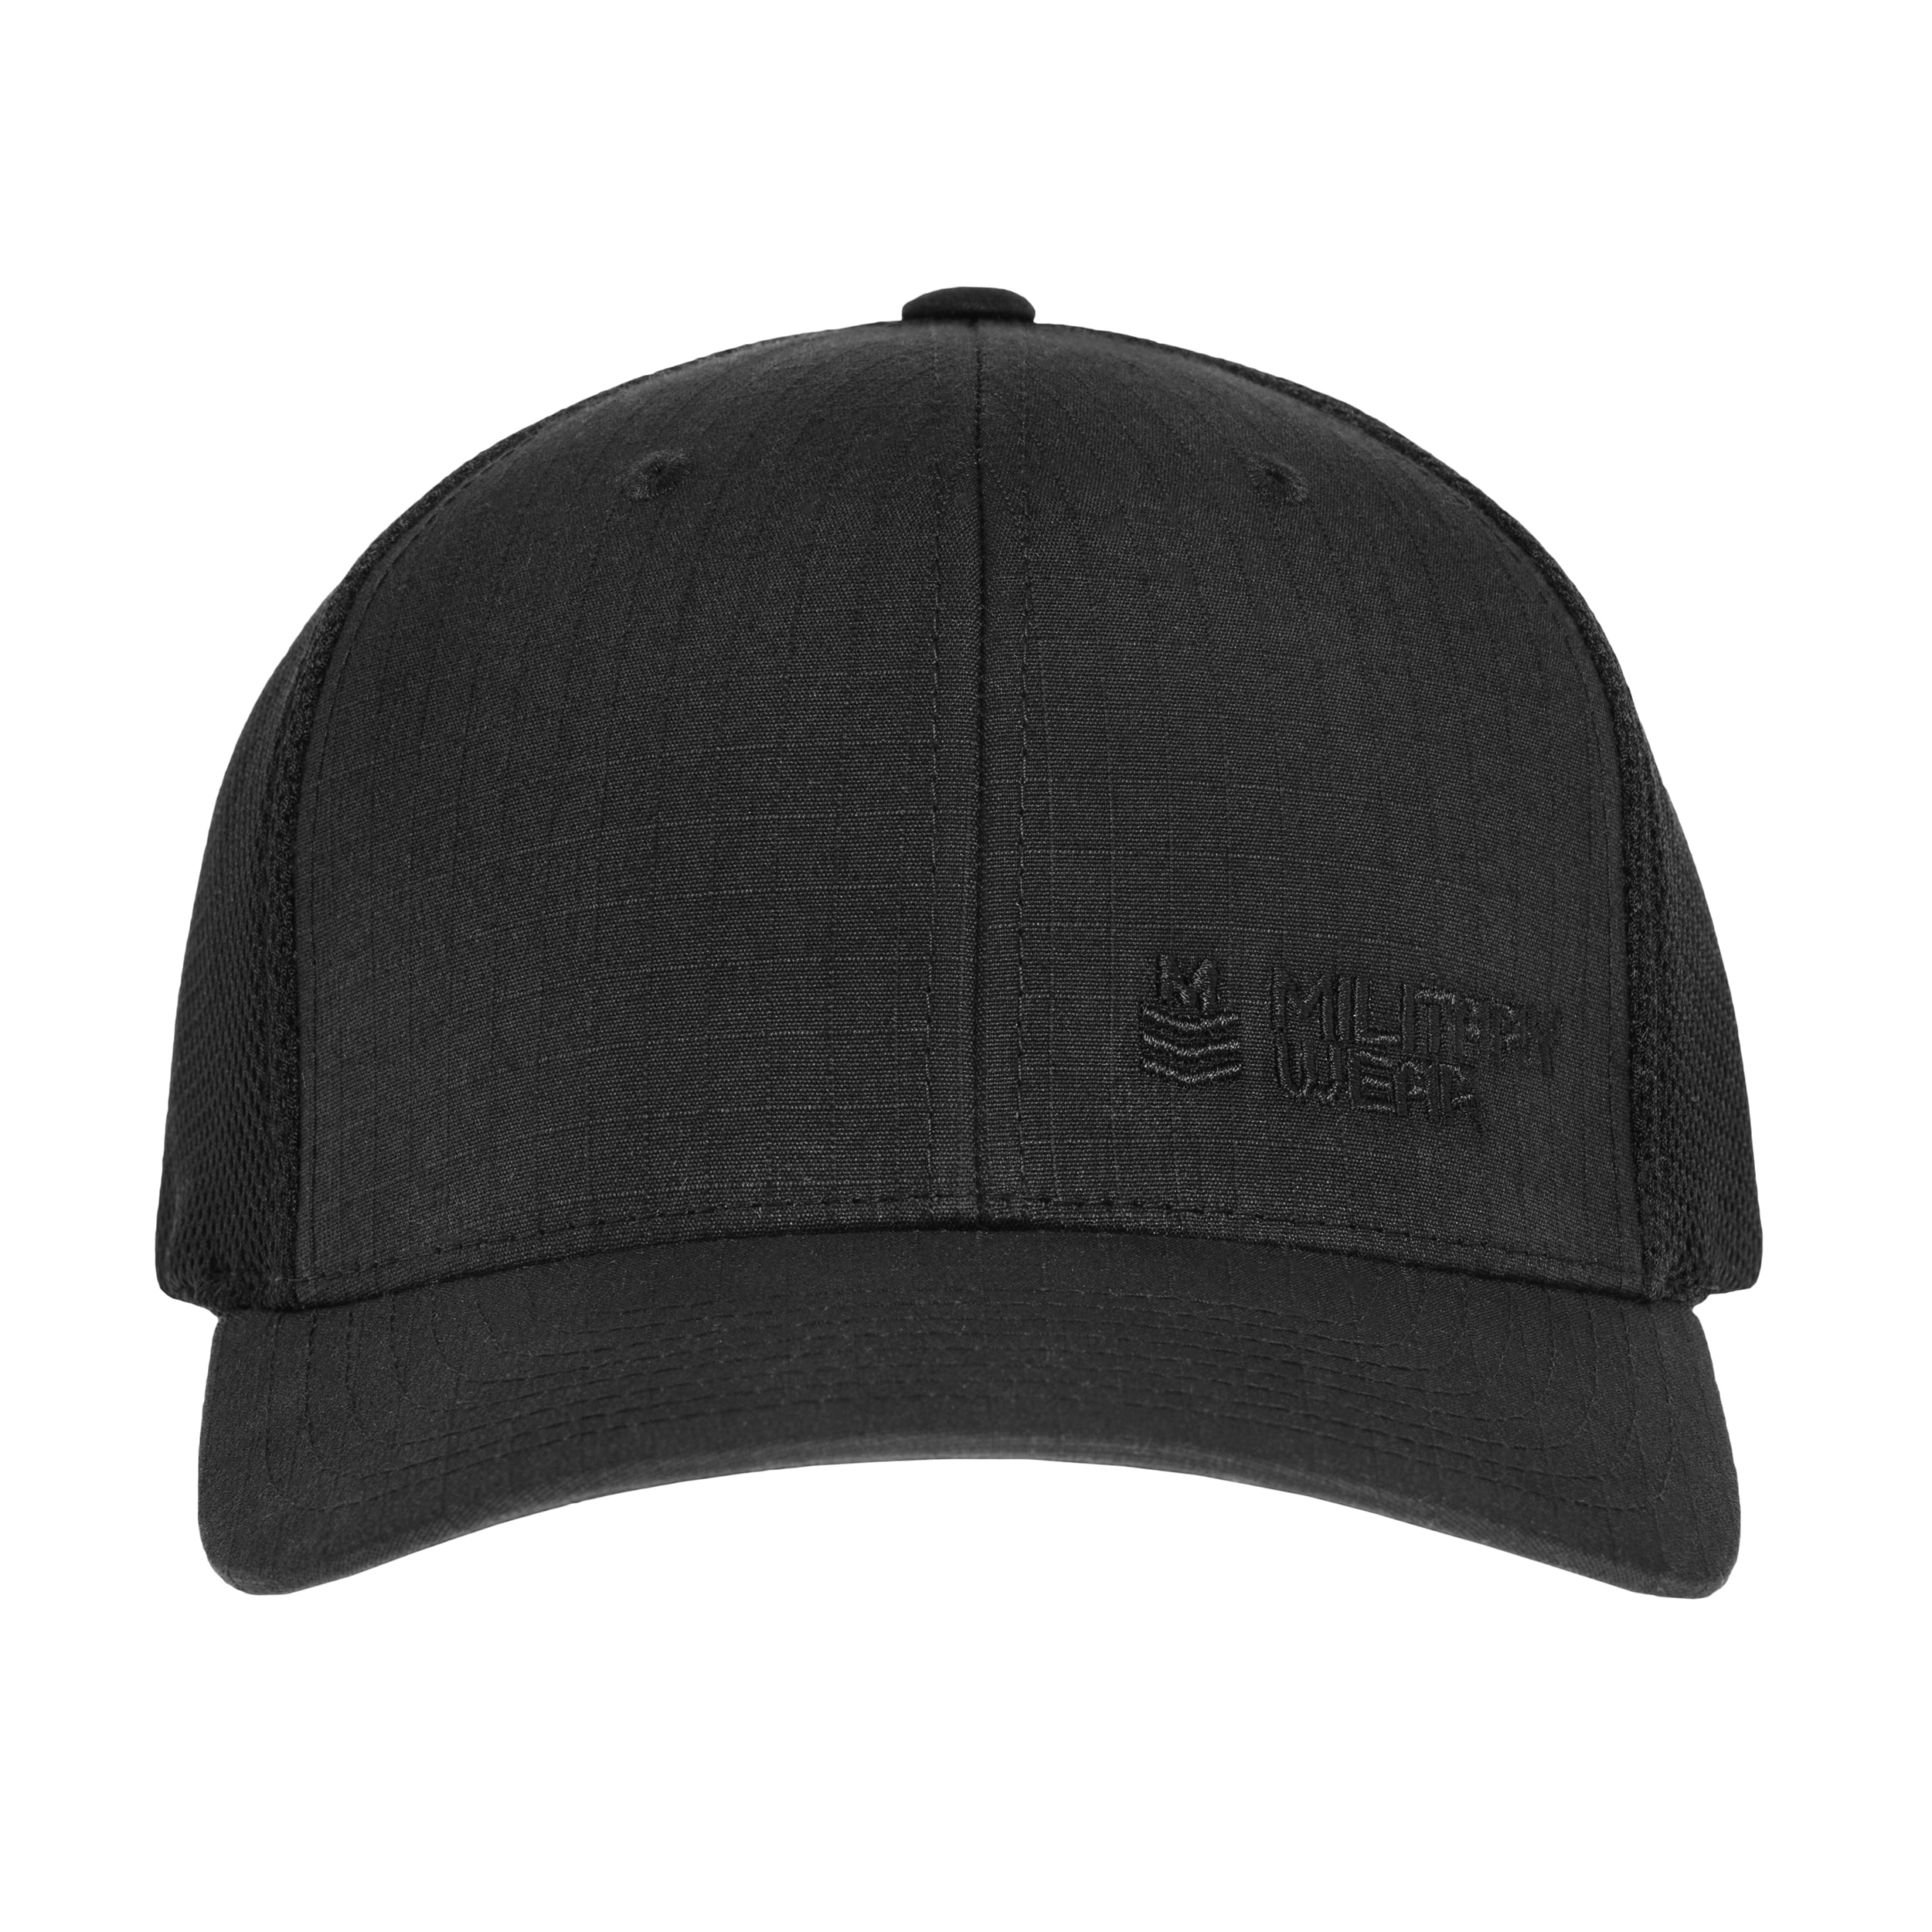 Бейсболка Military Wear 110 Rip-Stop Mesh Cap - Black